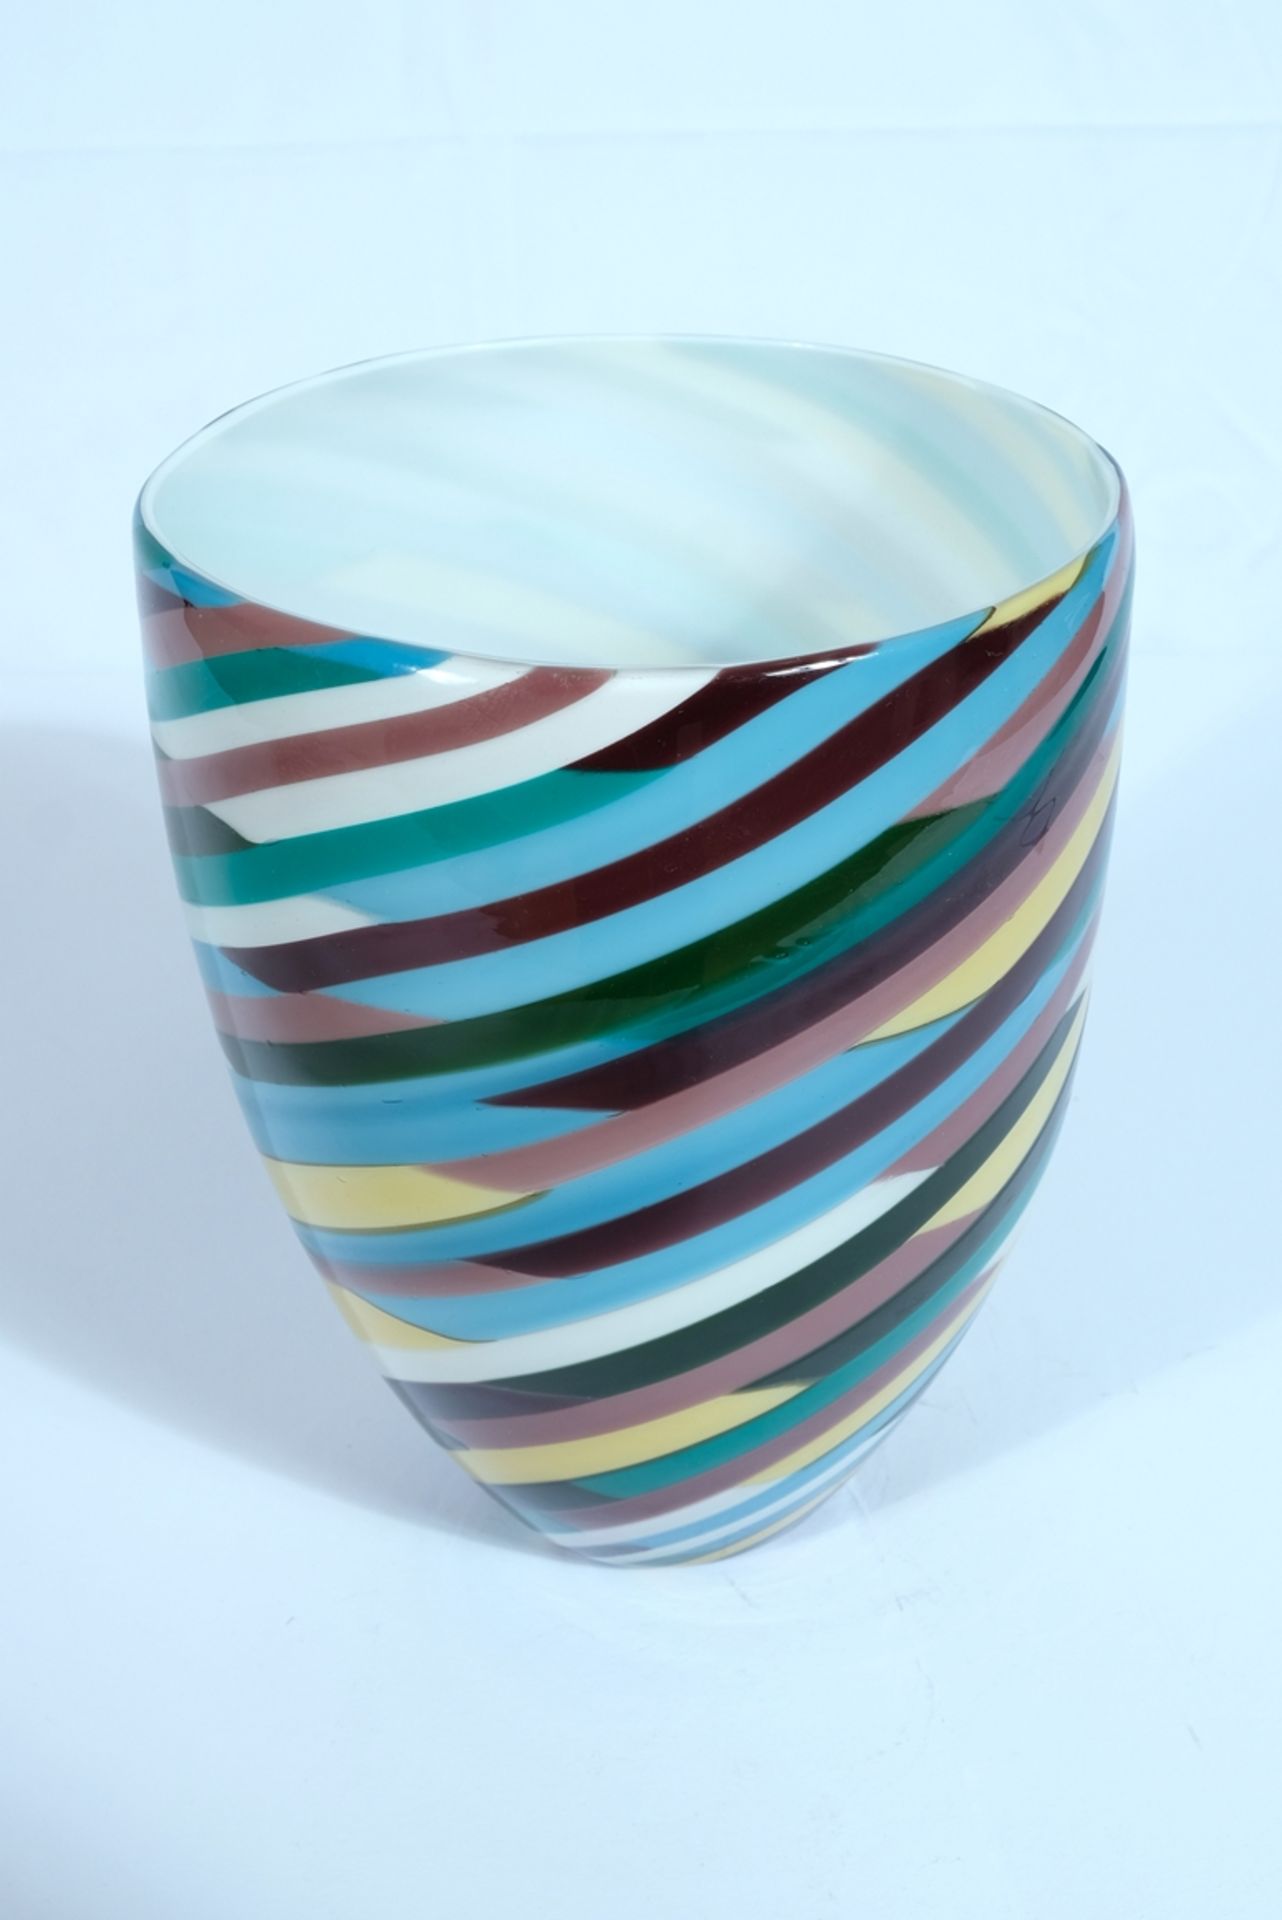 Venini vase "Klee", design by Laura Diaz de Santillana, 1989 Murano glass; mouth-blown.  - Image 2 of 4